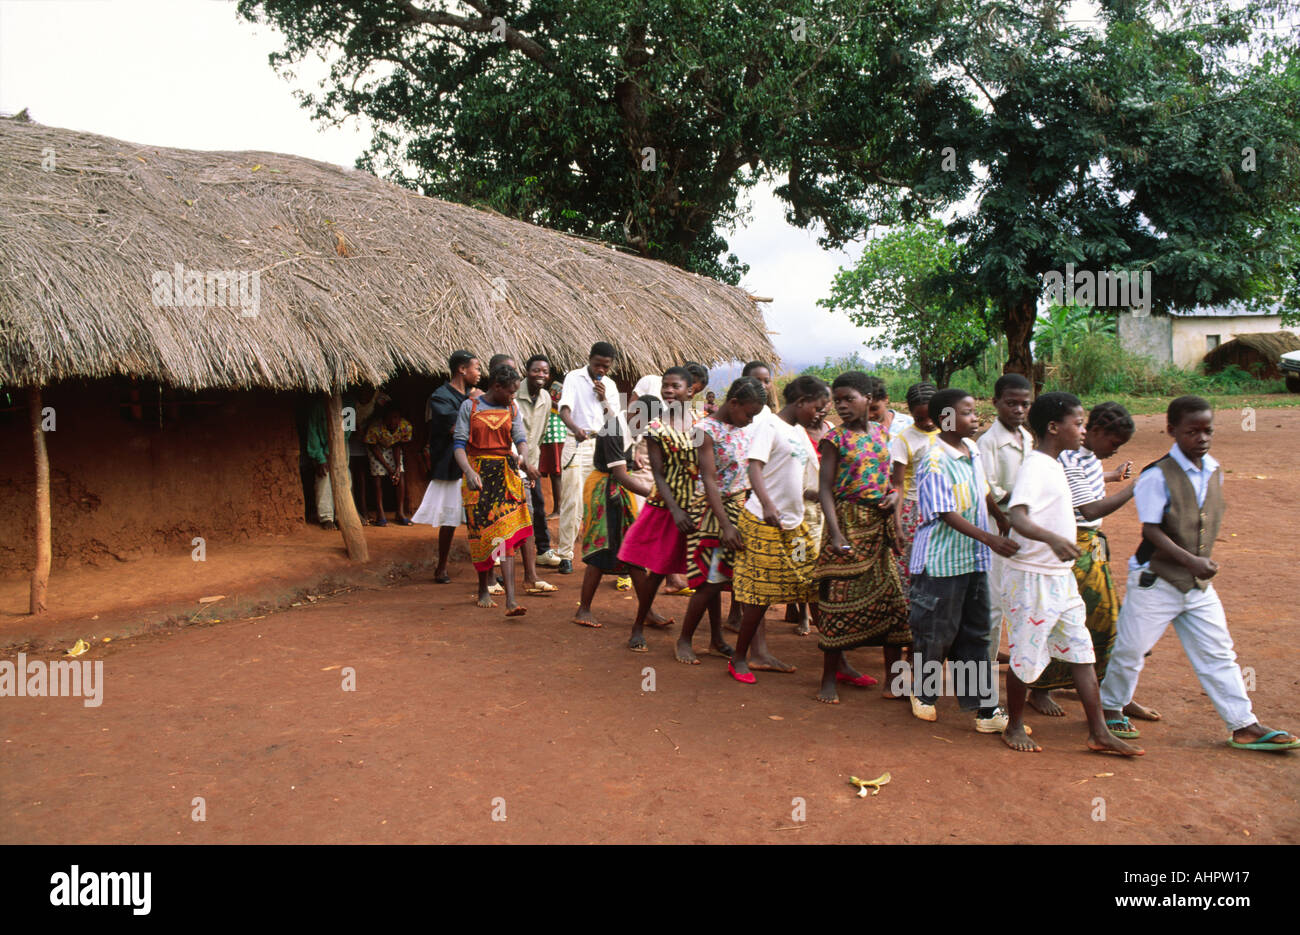 Rural schoolchildren changing classrooms, walking in line. Mozambique Stock Photo